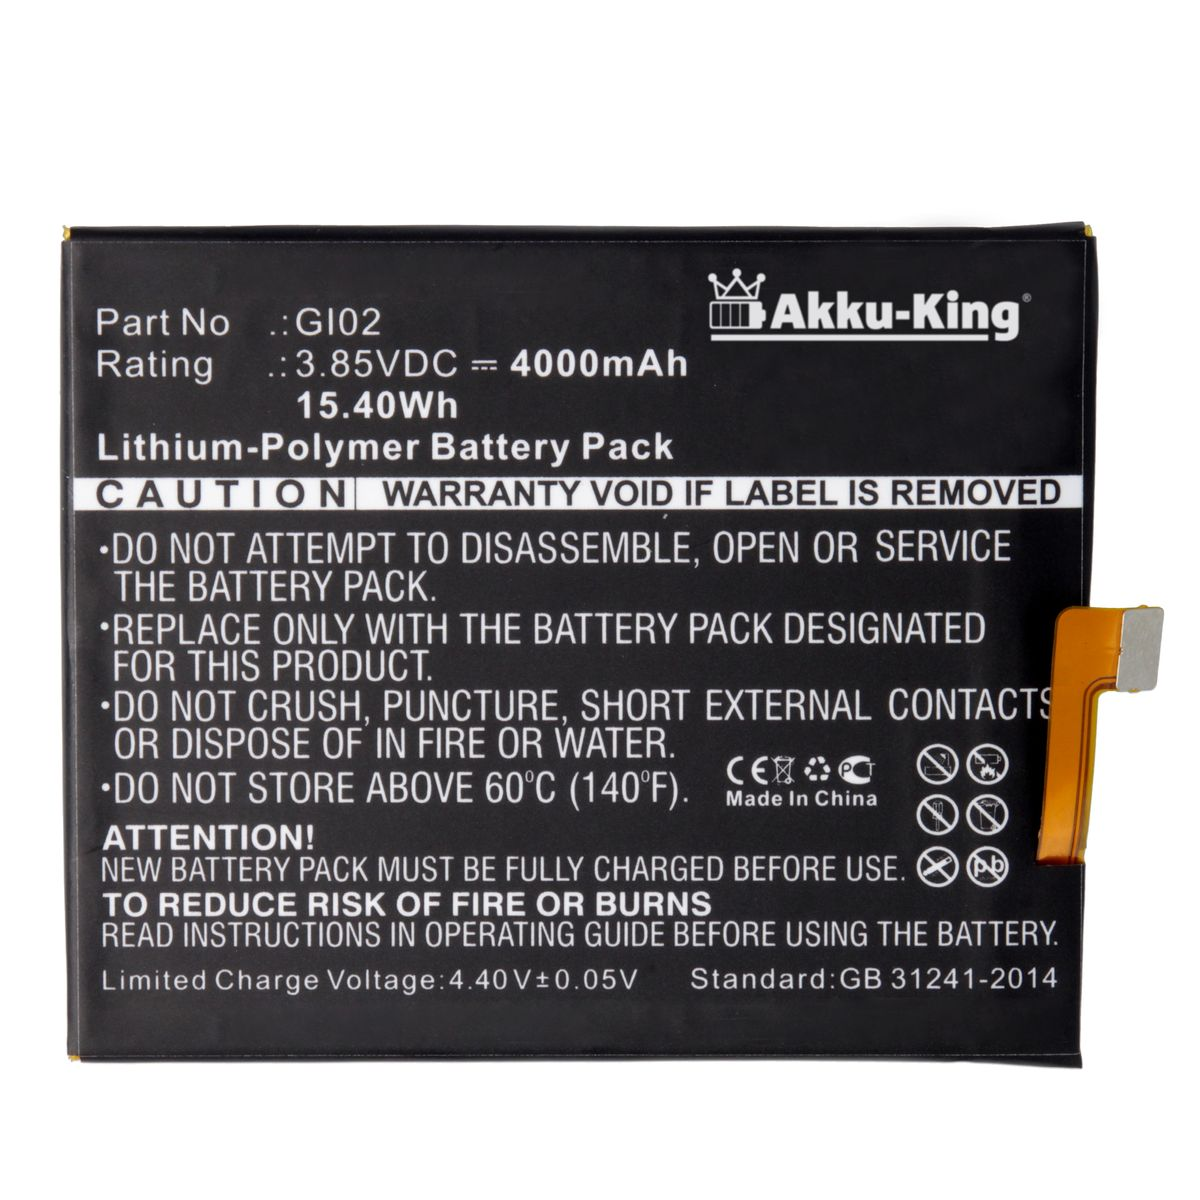 Handy-Akku, Volt, 4000mAh kompatibel GI02 Gigaset AKKU-KING 3.85 Akku mit Li-Polymer